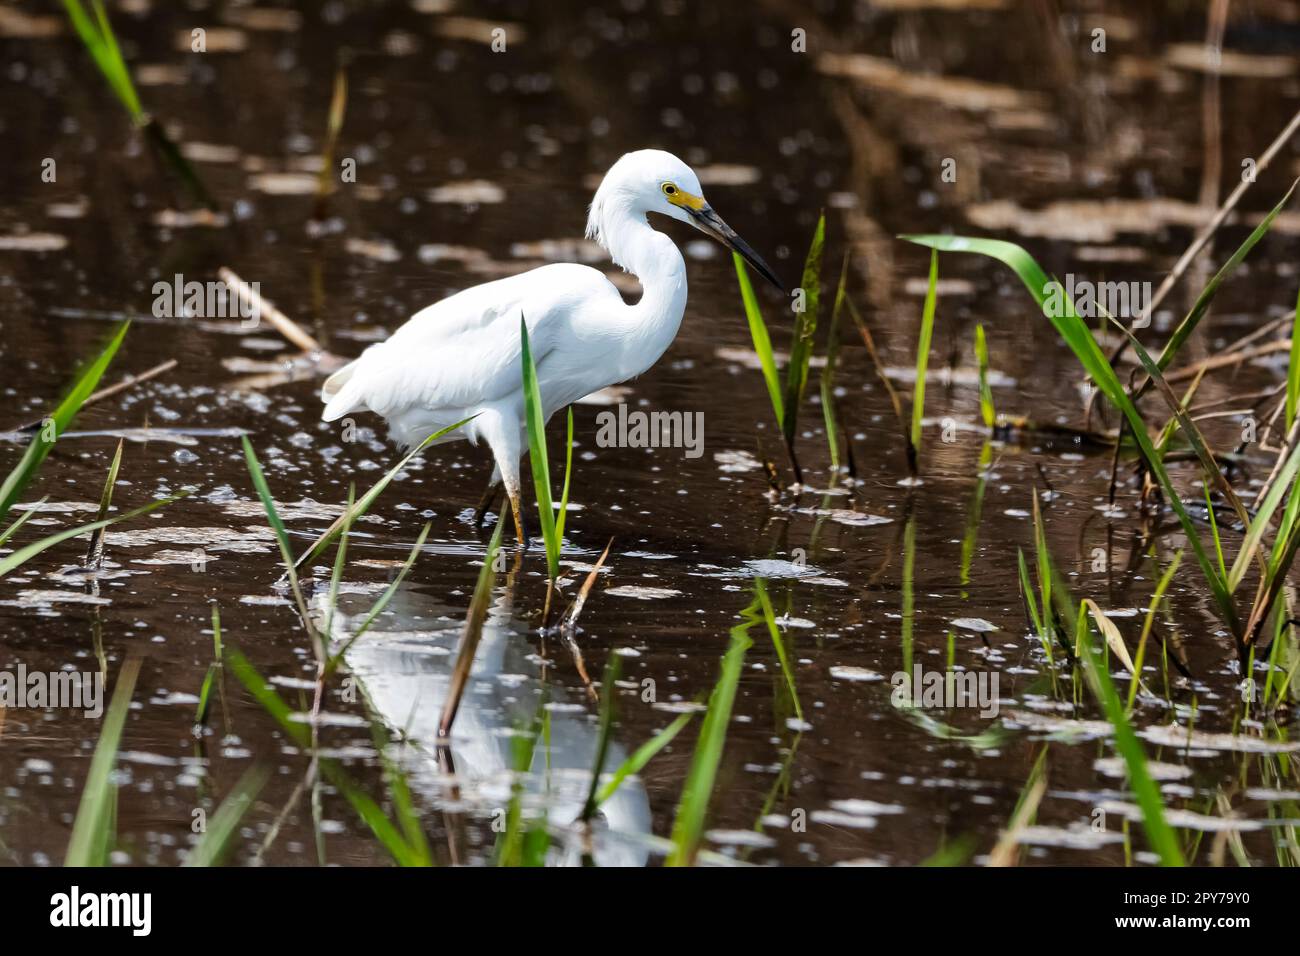 Eleganter Great Egret Walking in Flachwasser, Pantanal Wetlands, Mato Grosso, Brasilien Stockfoto